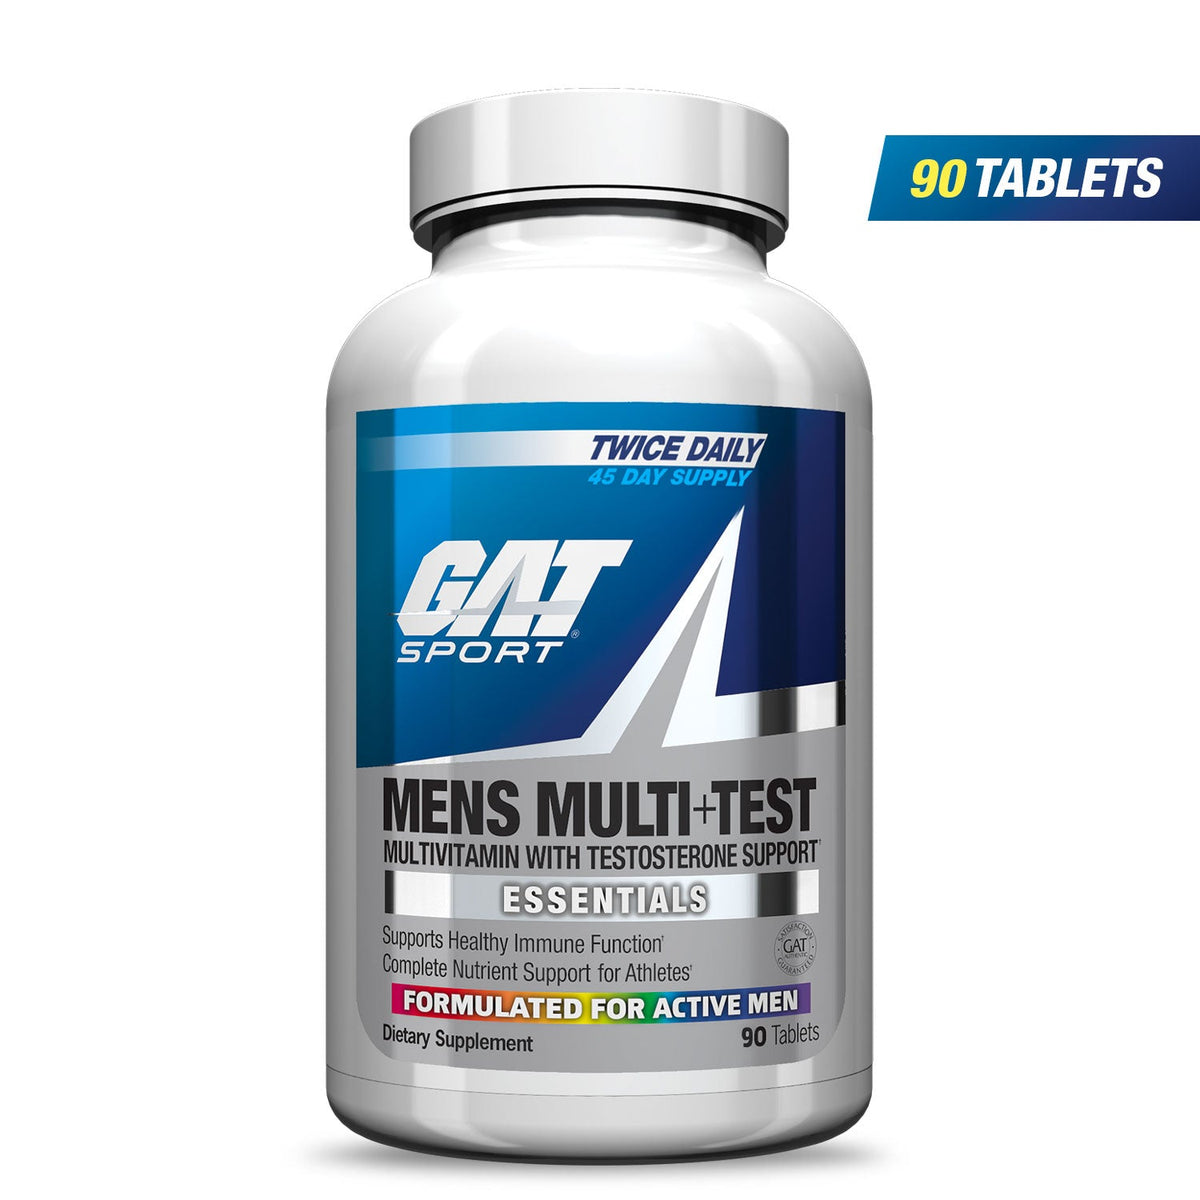 Gat Sport. Ultramins Mens витамины. Multivitamin Mens - Jarvis - 60 Capsules. Test about Vitamins. Витамины men sport